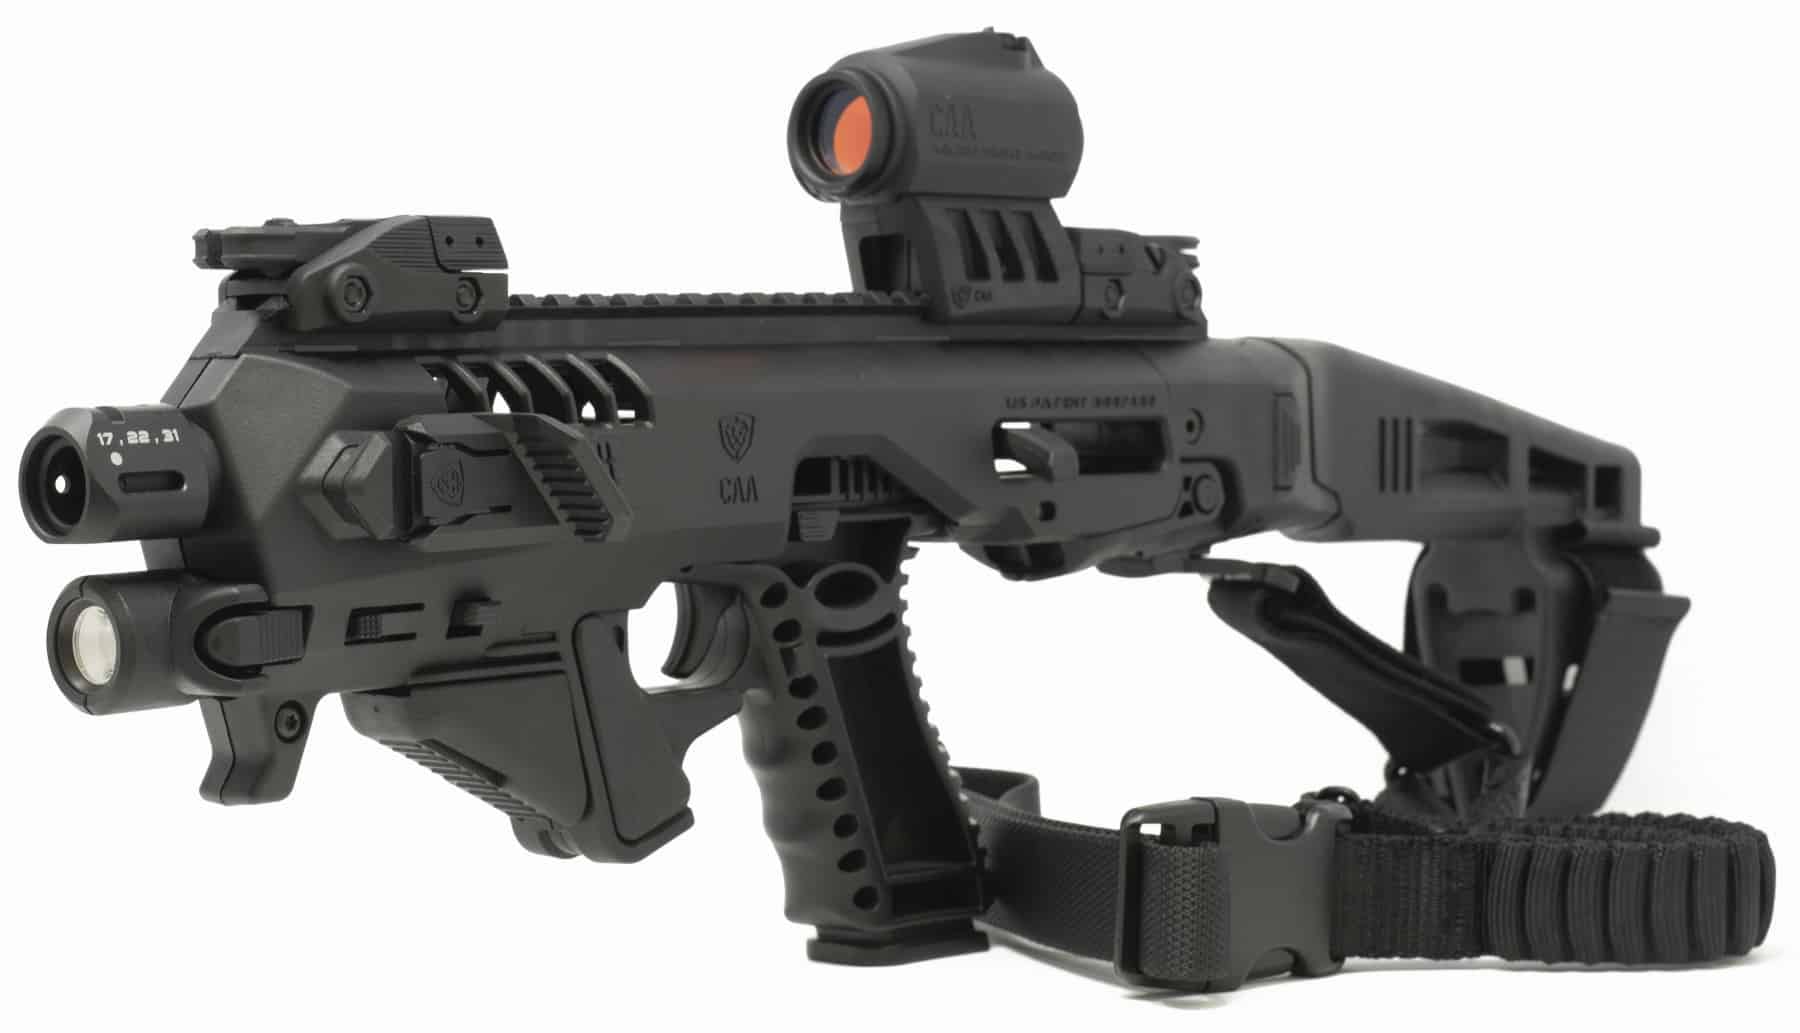 Micro Roni Glock 26 / 27 Stabilizer Gen 4 / Gen 4 X CAA Industries